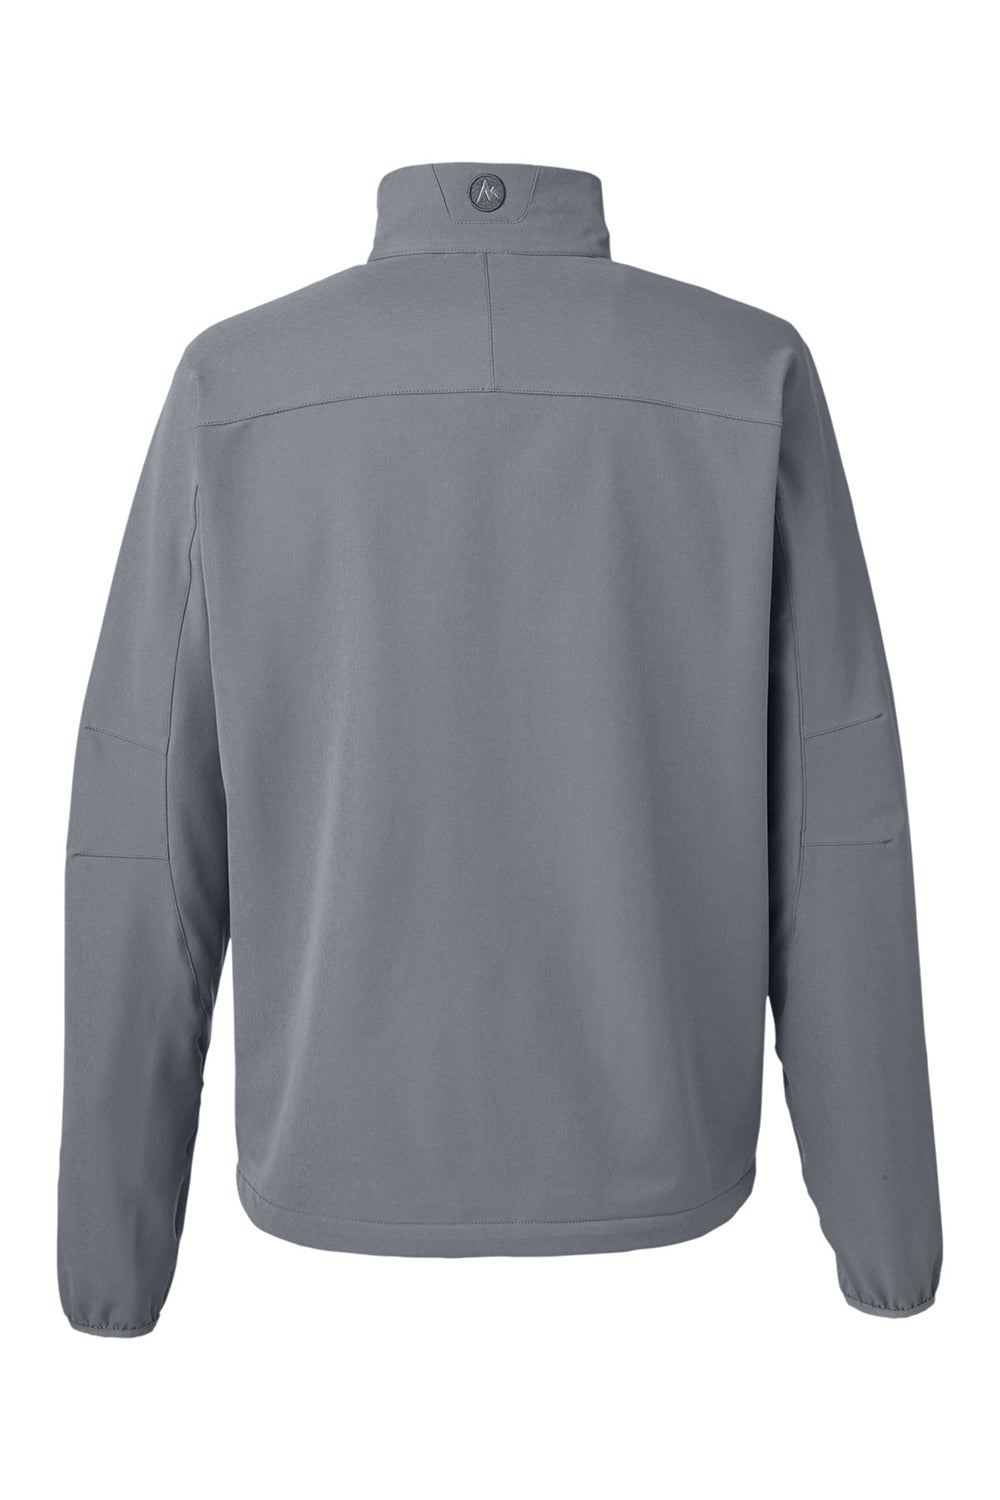 Marmot 98260 Mens Tempo Water Resistant Full Zip Jacket Cinder Grey Flat Back